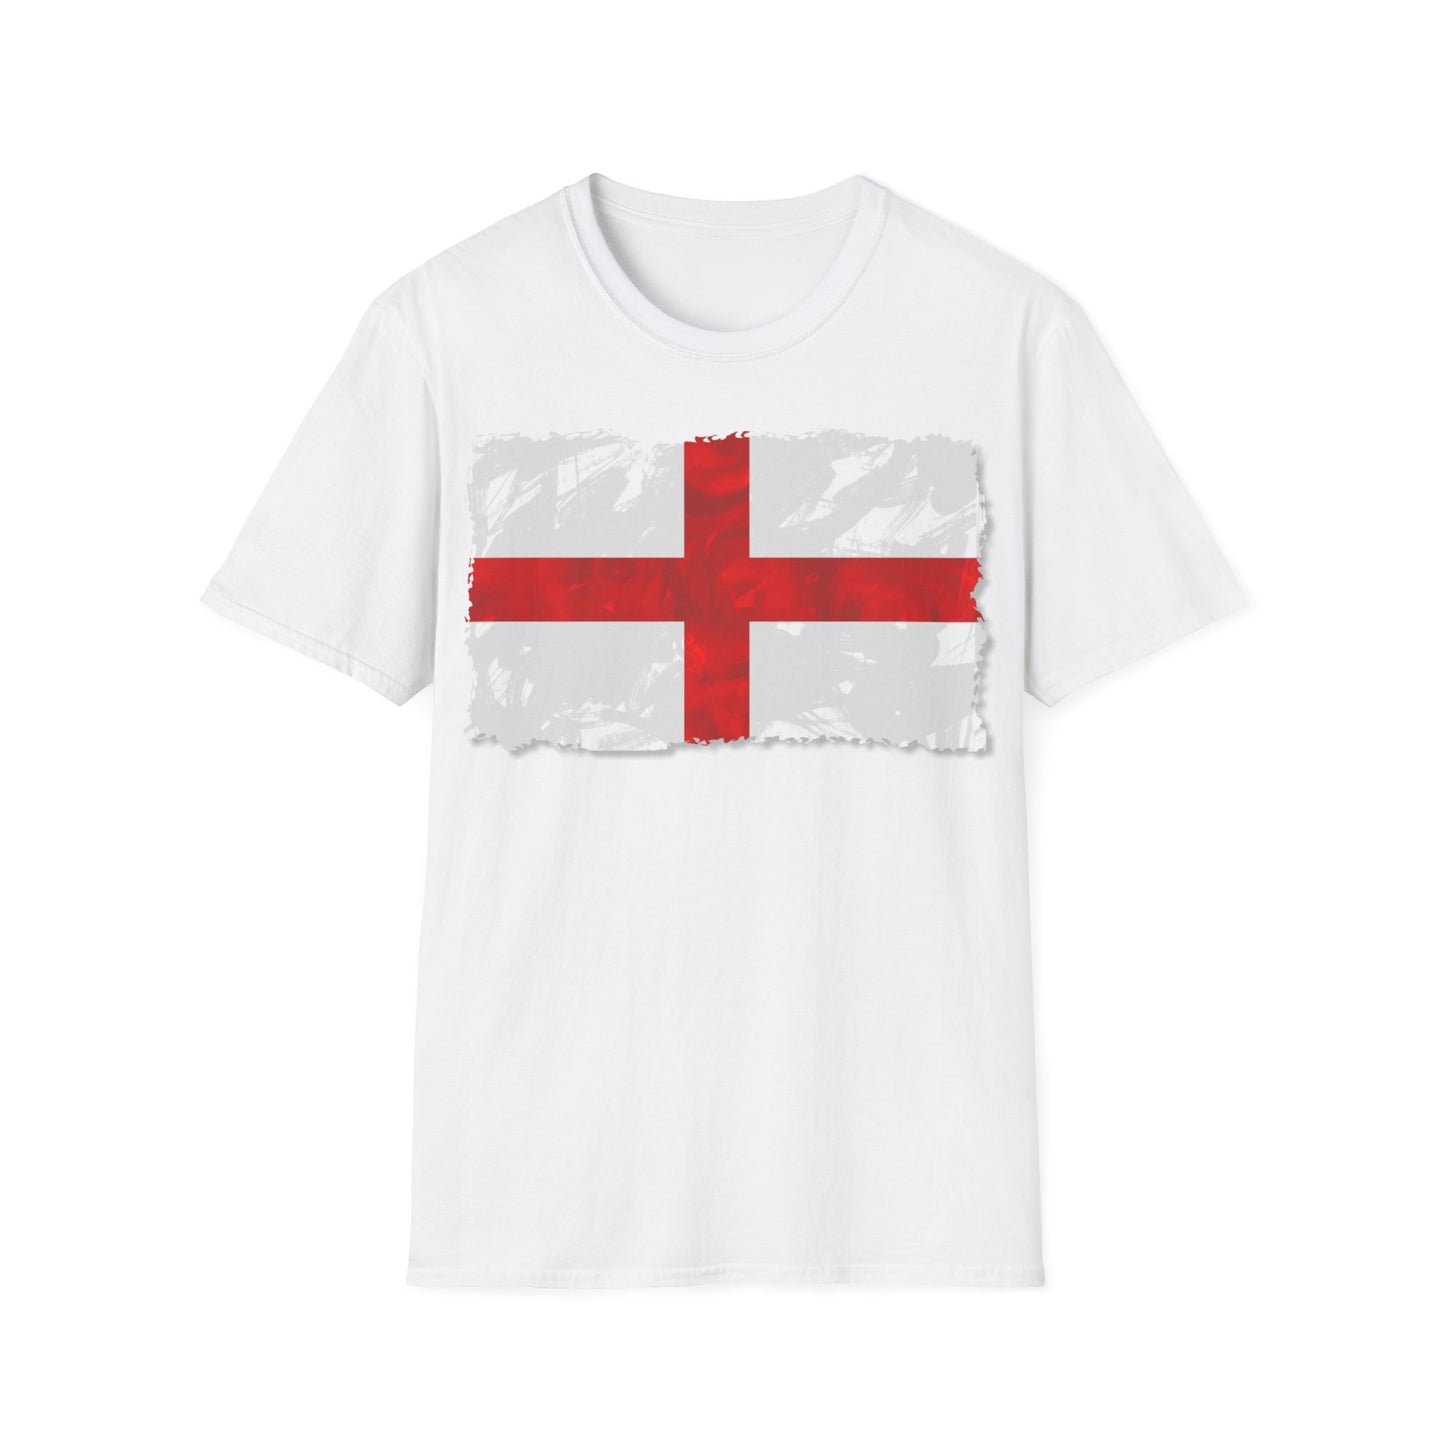 Grunge Painted England Flag T-Shirt